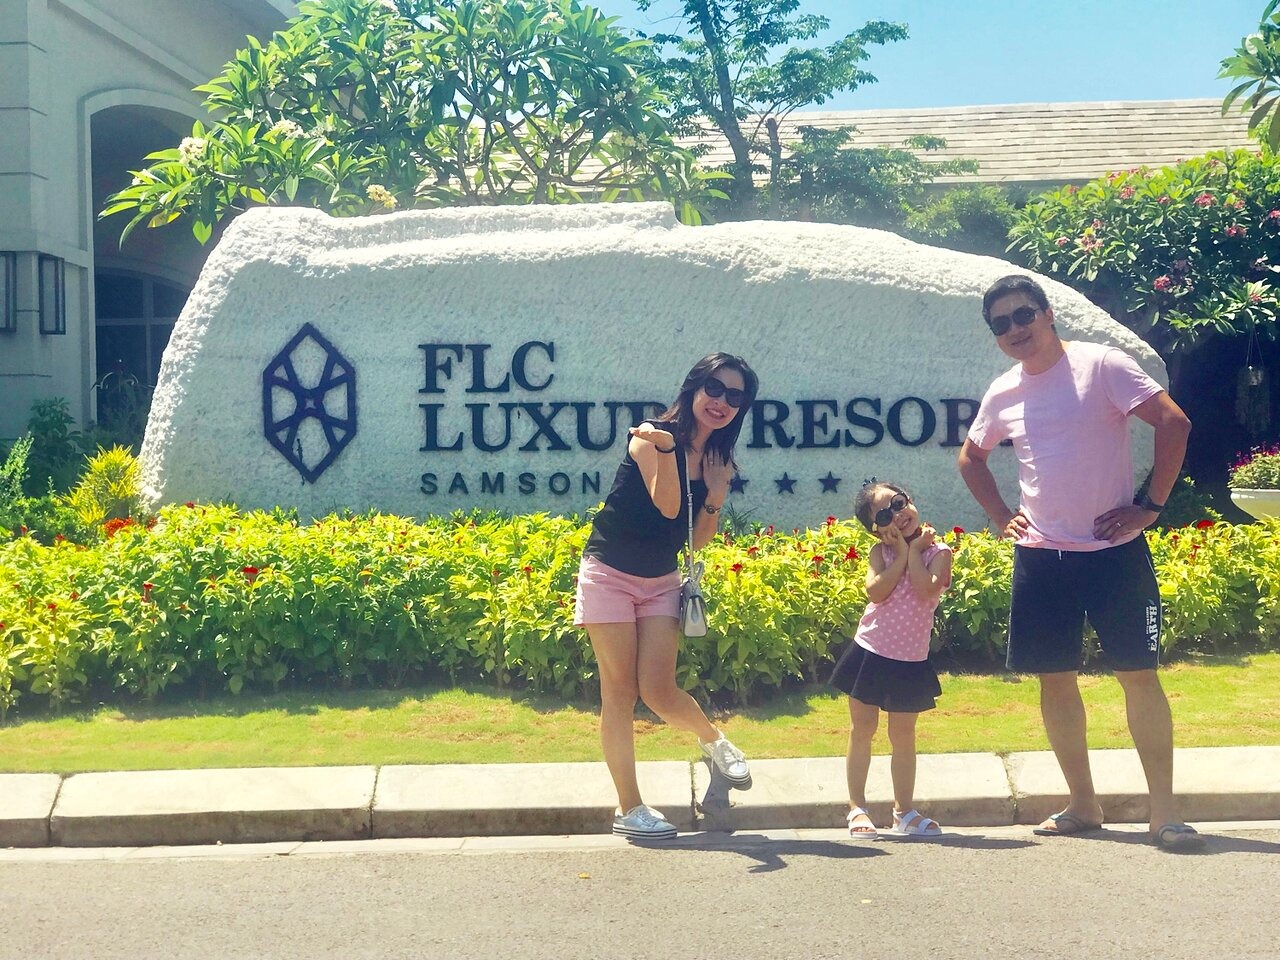 Review FLC Luxury Resort Samson